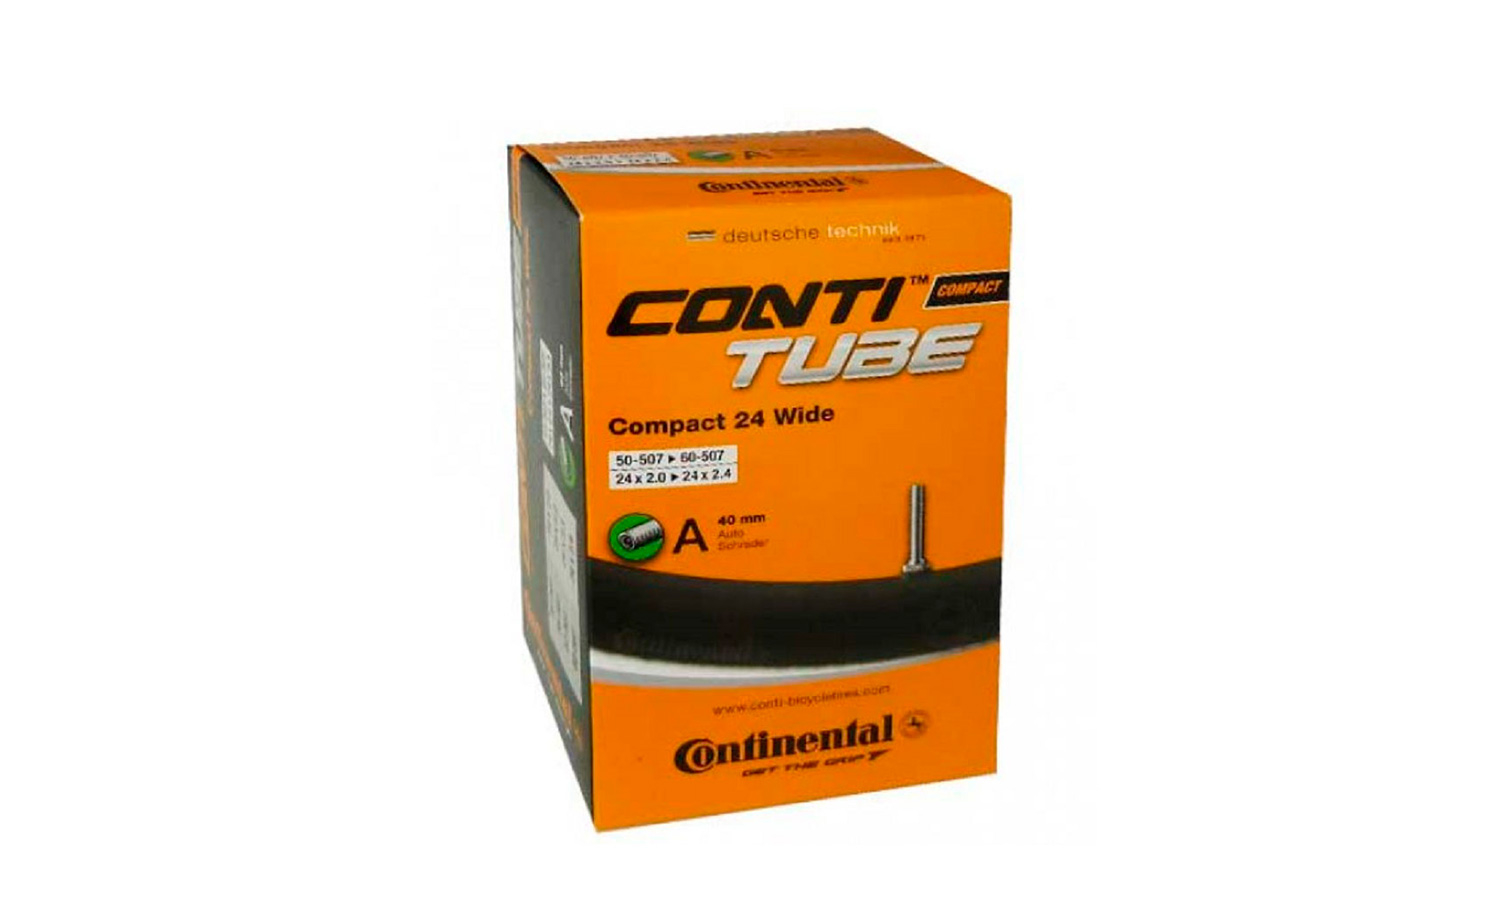 Камера Continental Compact 24"x2.0-2.4, 50-507 -> 60-507, AV40 мм